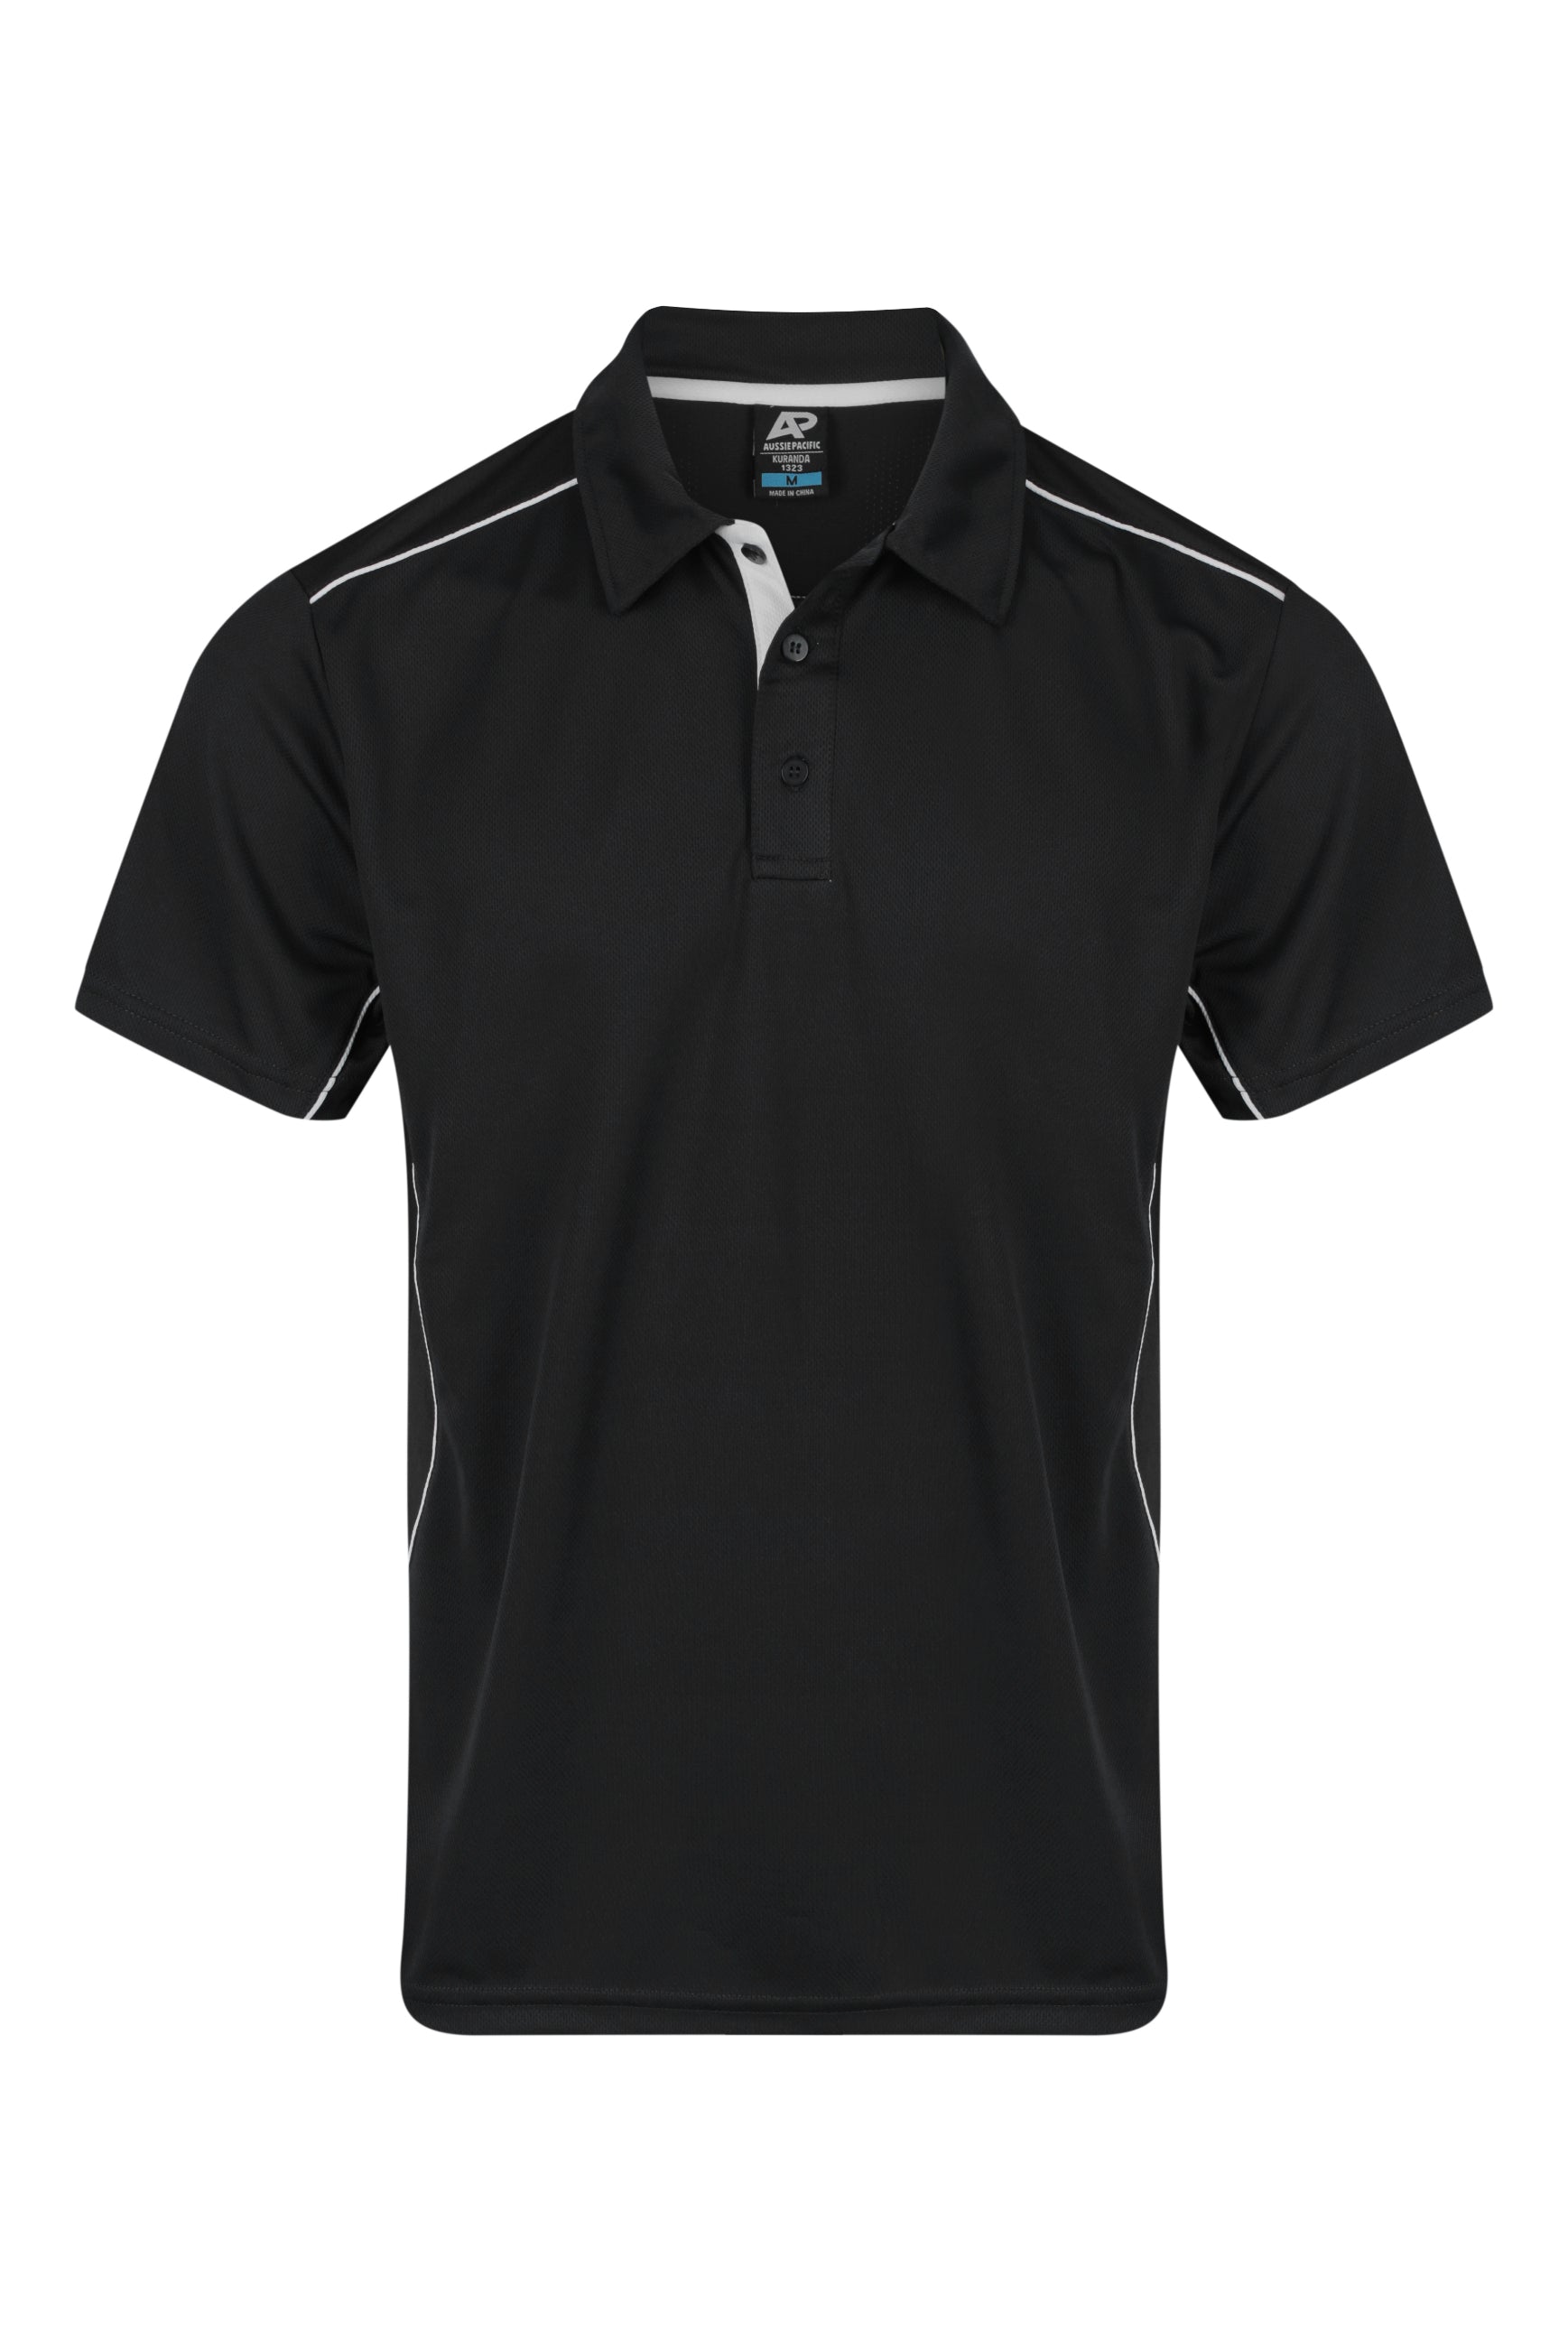 Custom Kuranda Uniform Polo Shirt - Black/White